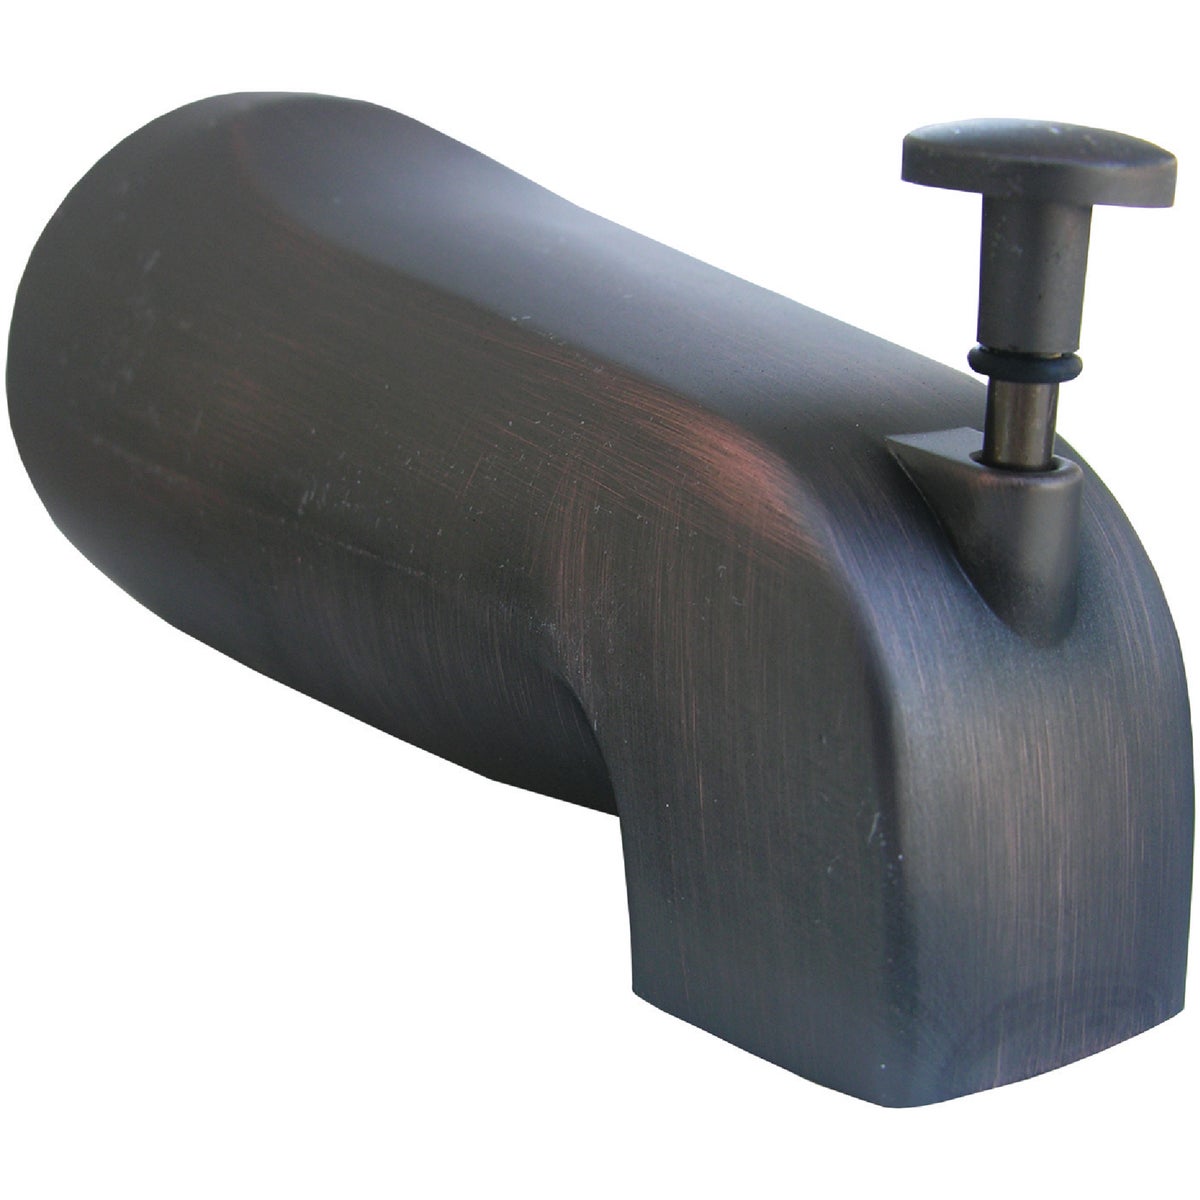 Lasco 4-Way Oil Rubbed Bronze Bathtub Spout with Diverter